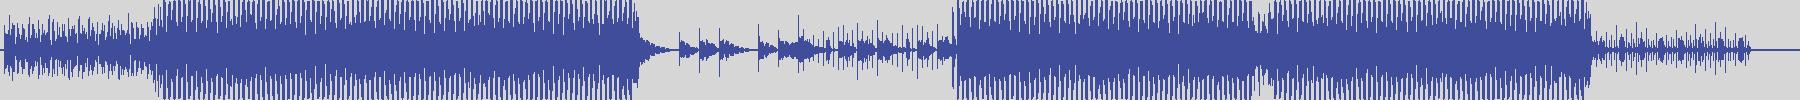 nf_boyz_records [NFY090] Deep Masters - Angkor Wat [Emotional Mix] audio wave form